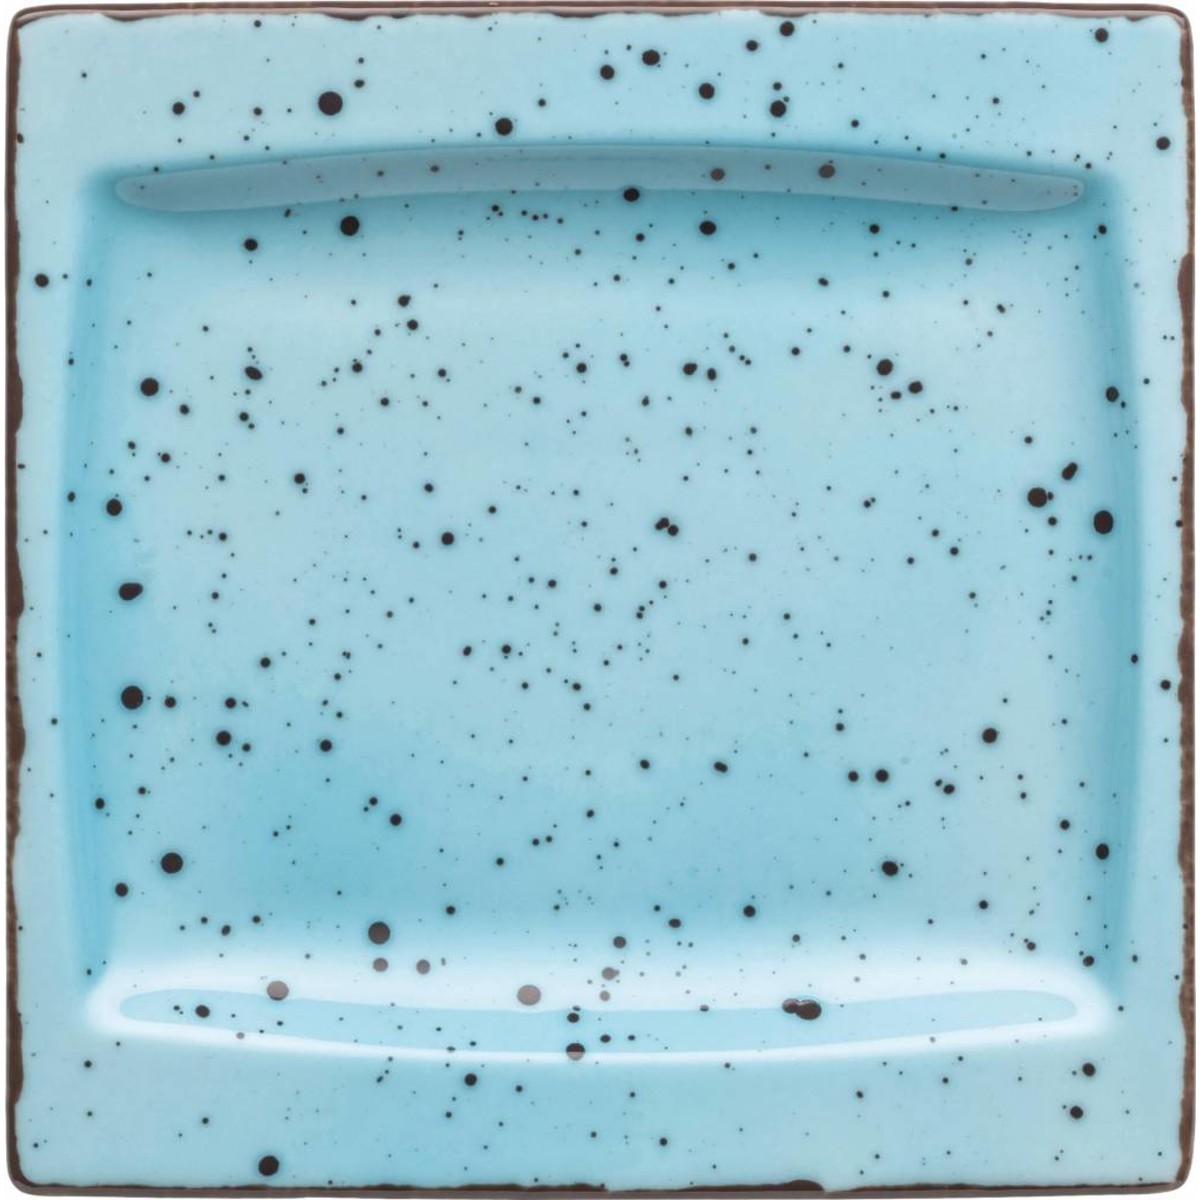 Porzellanserie "Granja" aqua Platte flach eckig, 18 x 18 cm